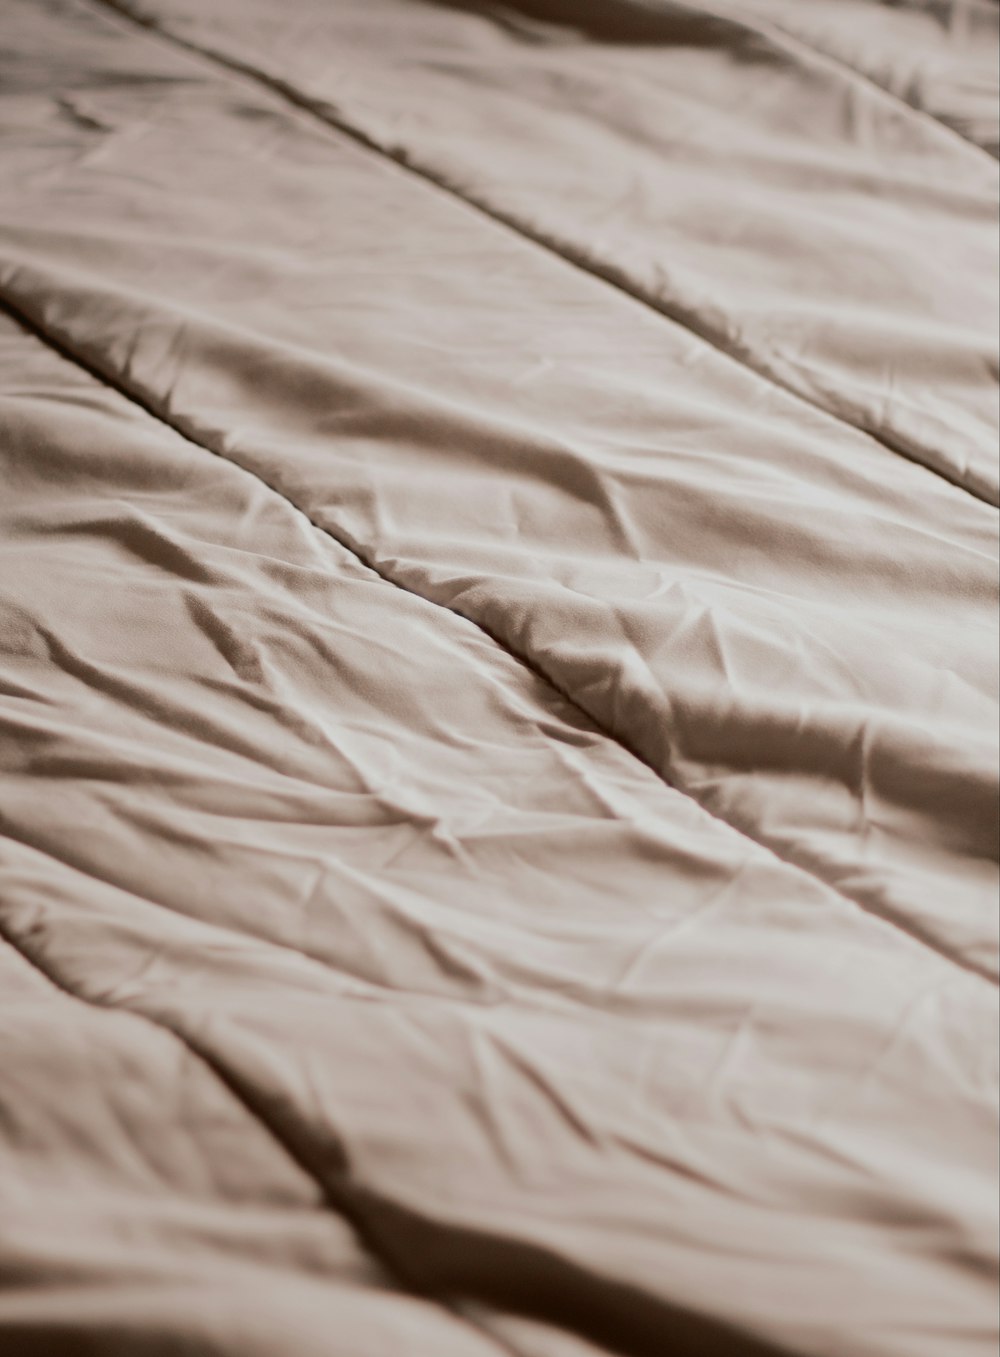 a close up of a white sheet